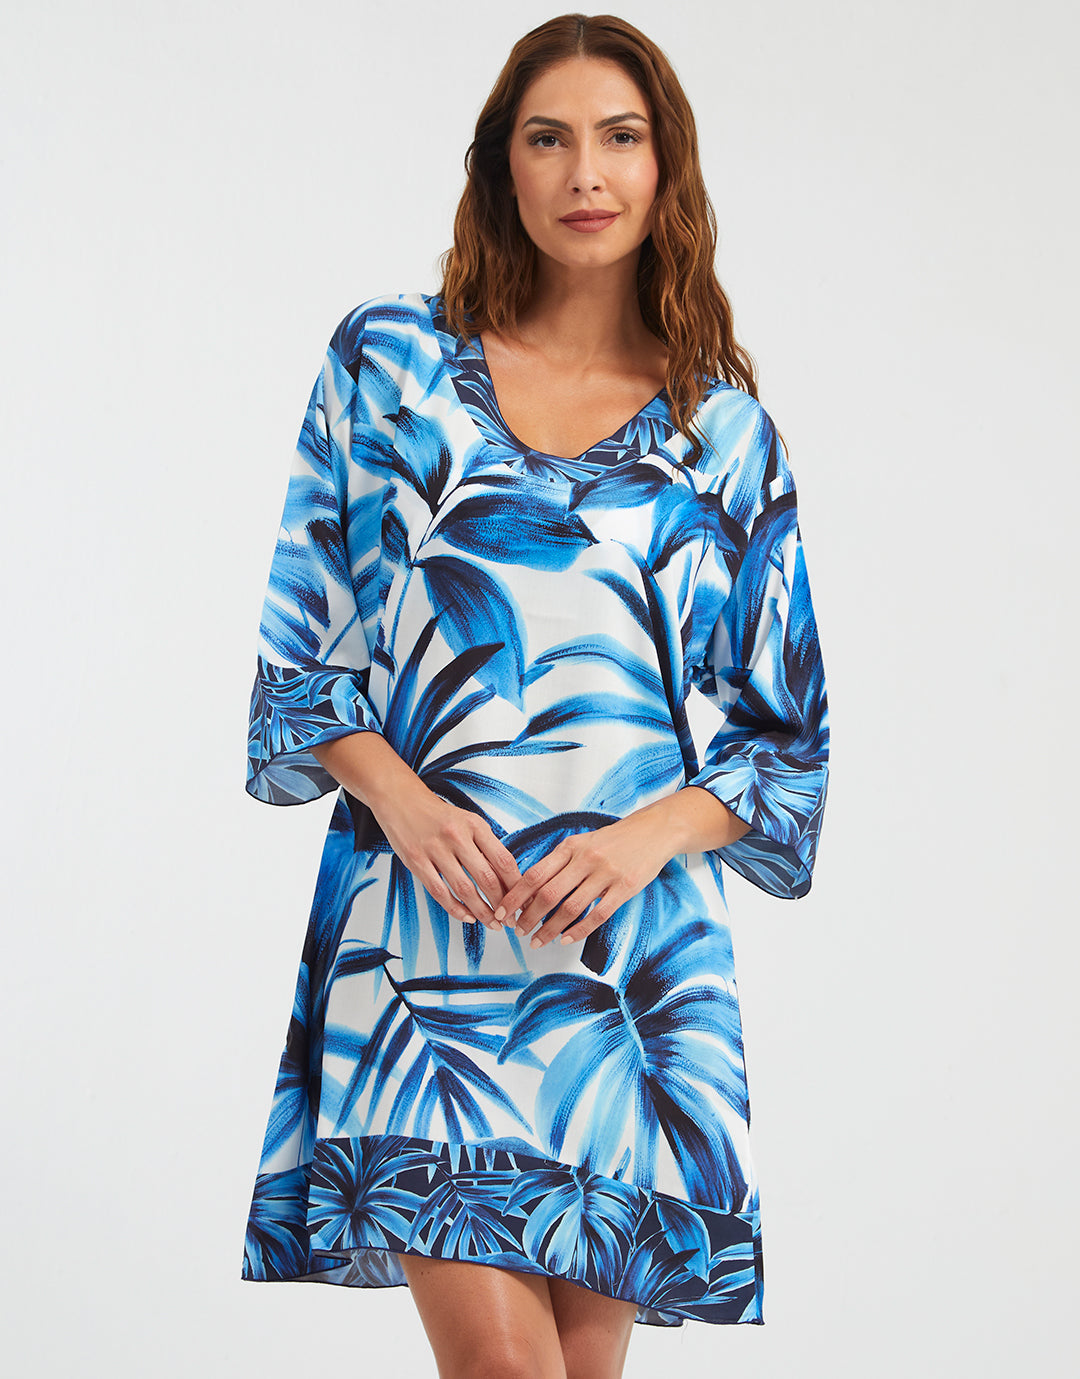 Azura Dress - Blue and White - Simply Beach UK